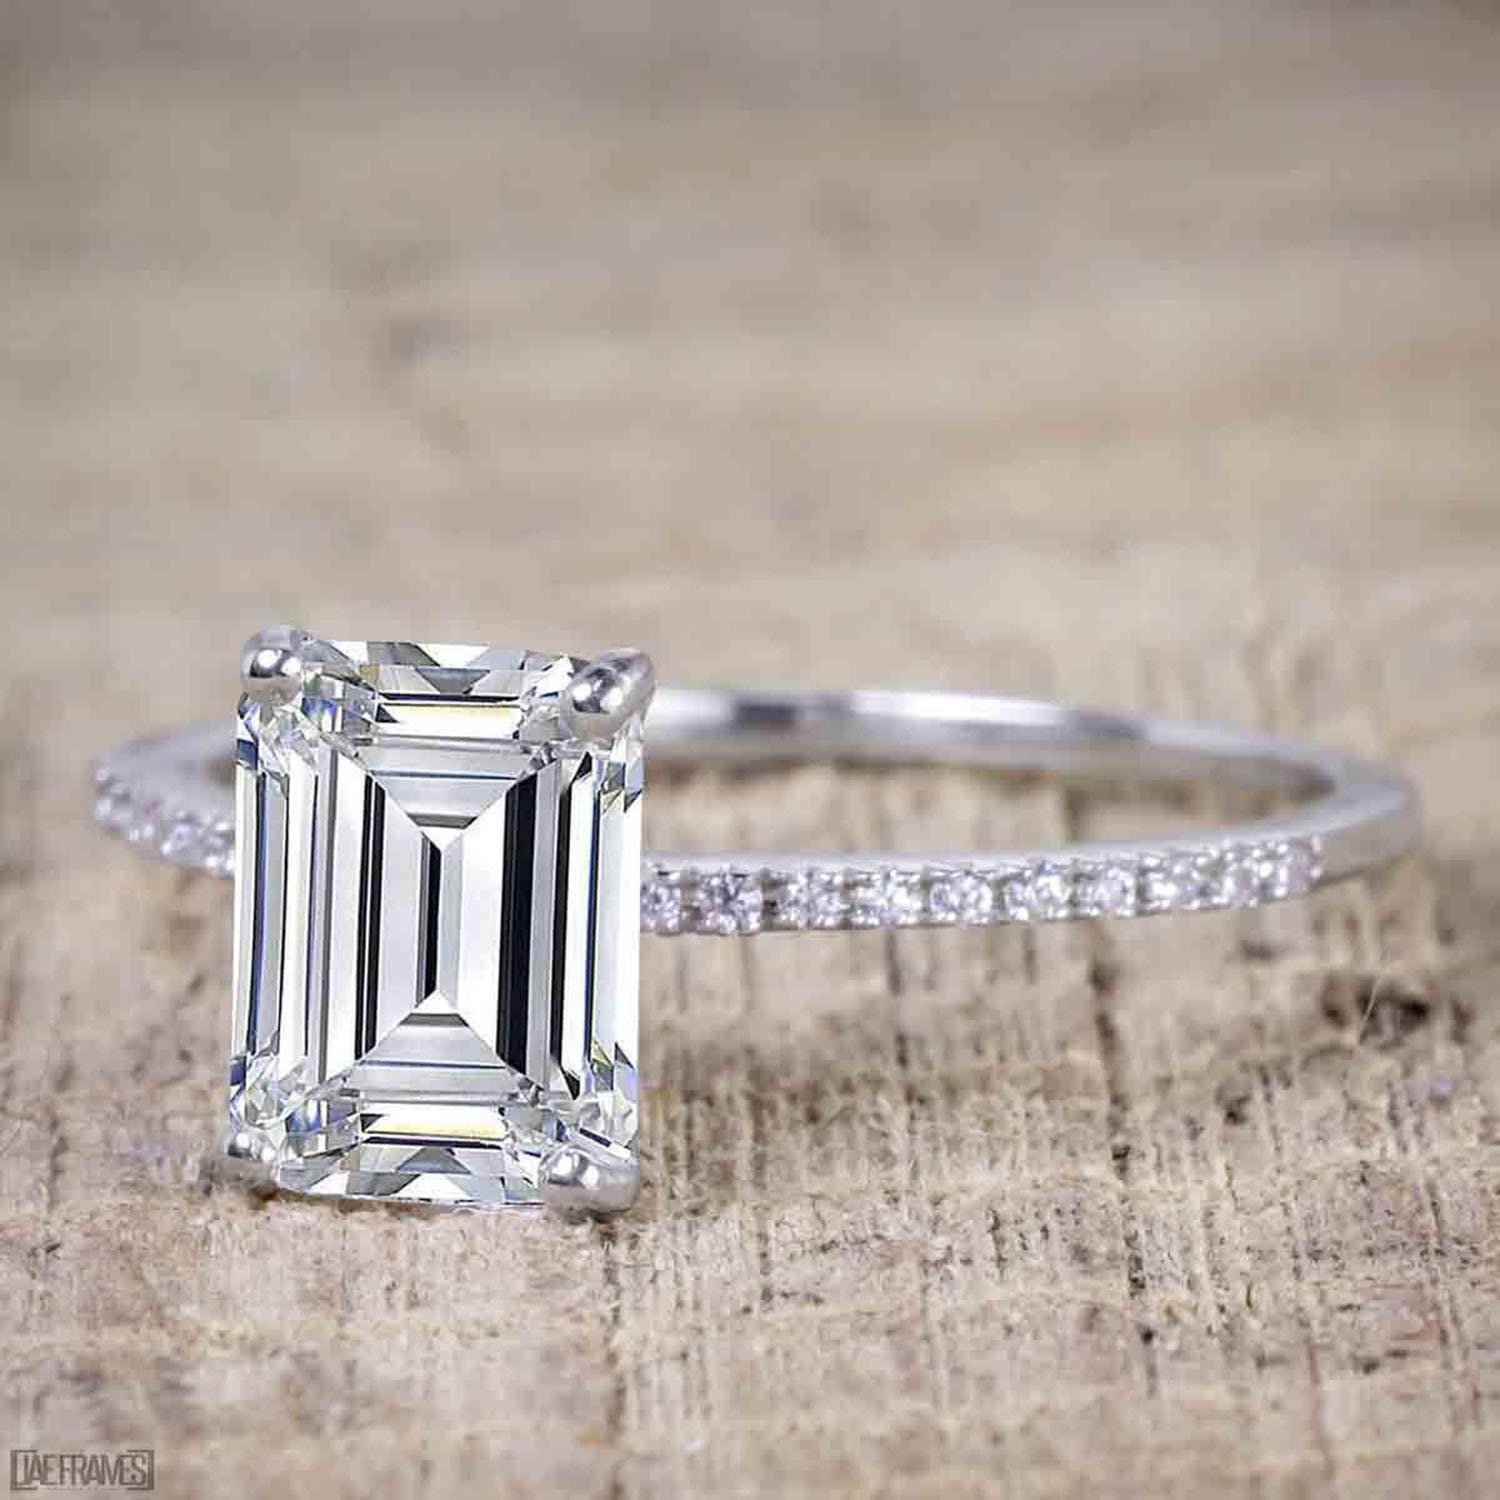 Vintage Look Art Deco 7x5mm Emerald Cut Moissanite Diamond | Etsy